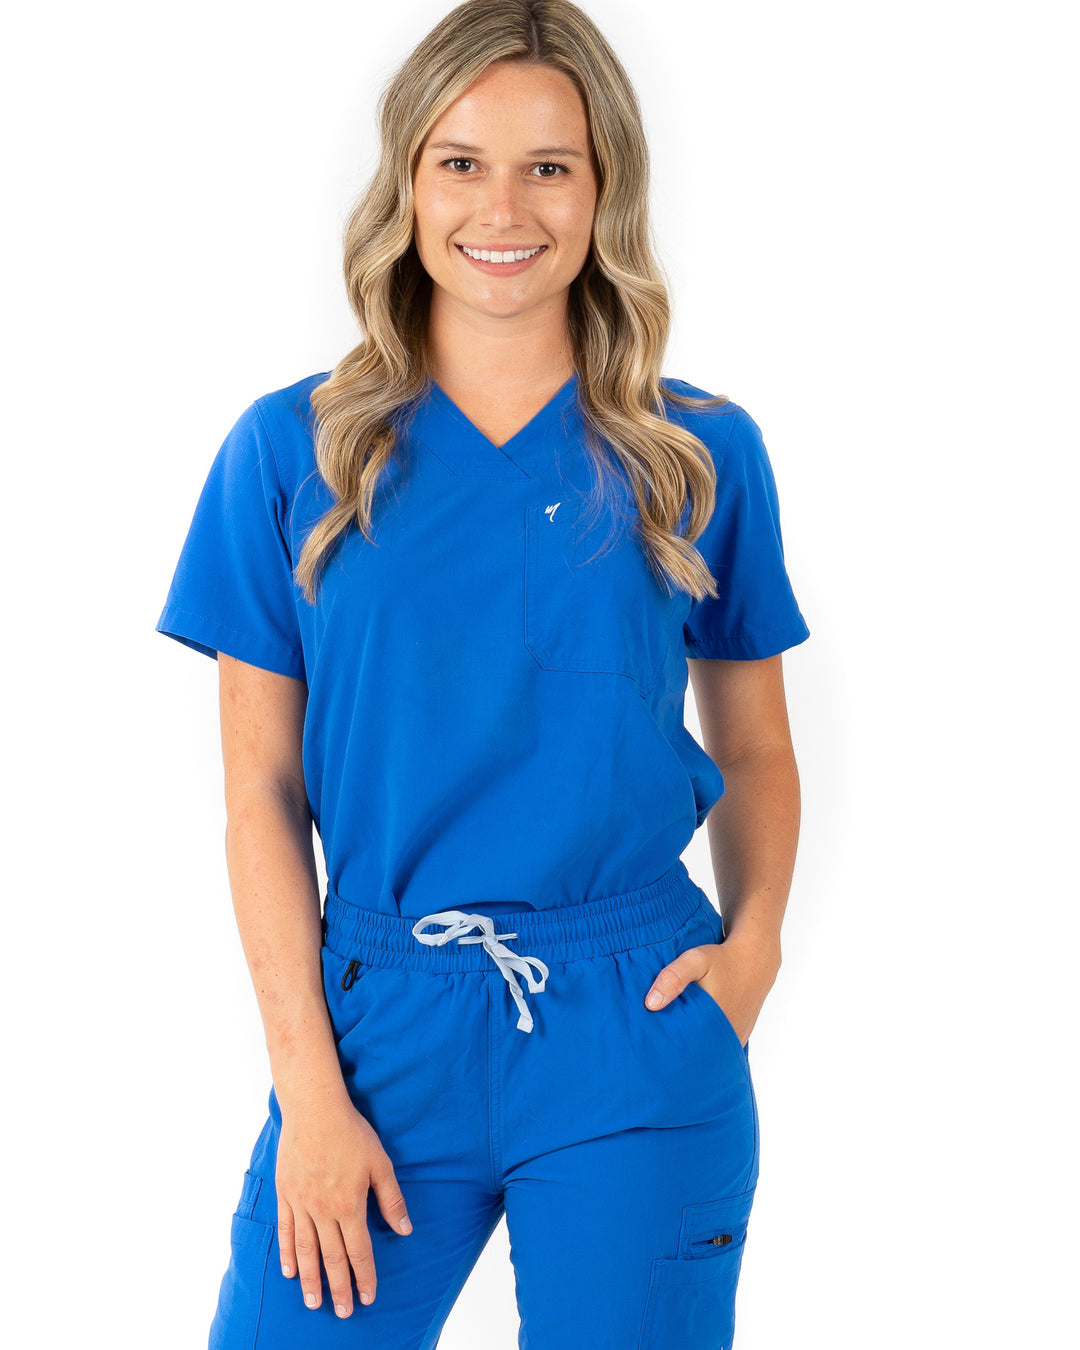 women's Royal Blue Scrub Top - Jogger Scrubs by Millennials In Medicine (Mim Scrubs)